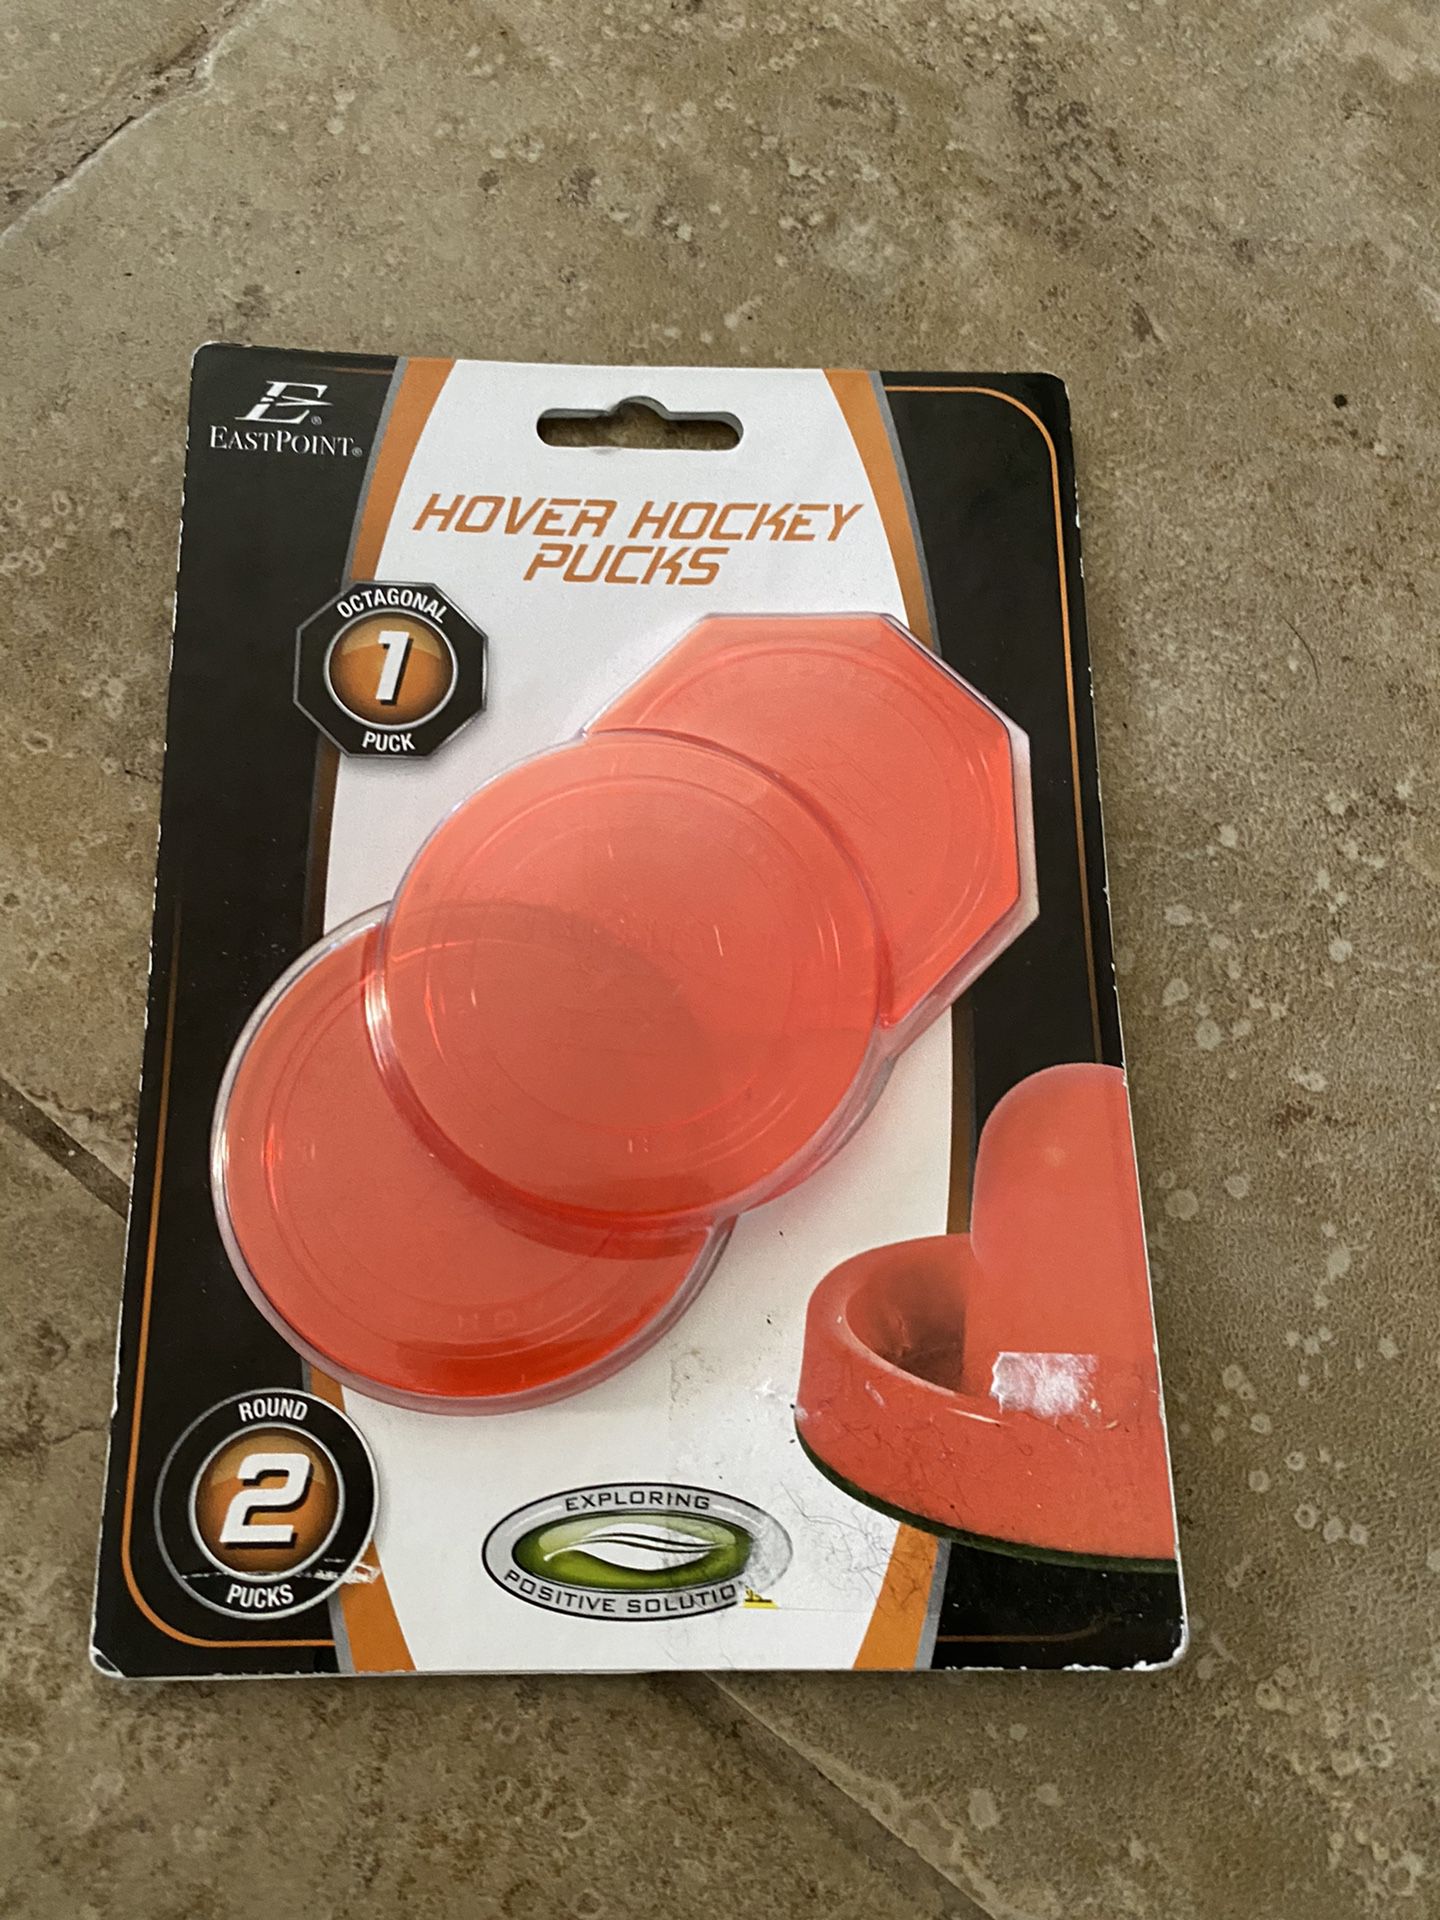 Brand new hover hockey pucks for air hockey table round 2 pucks